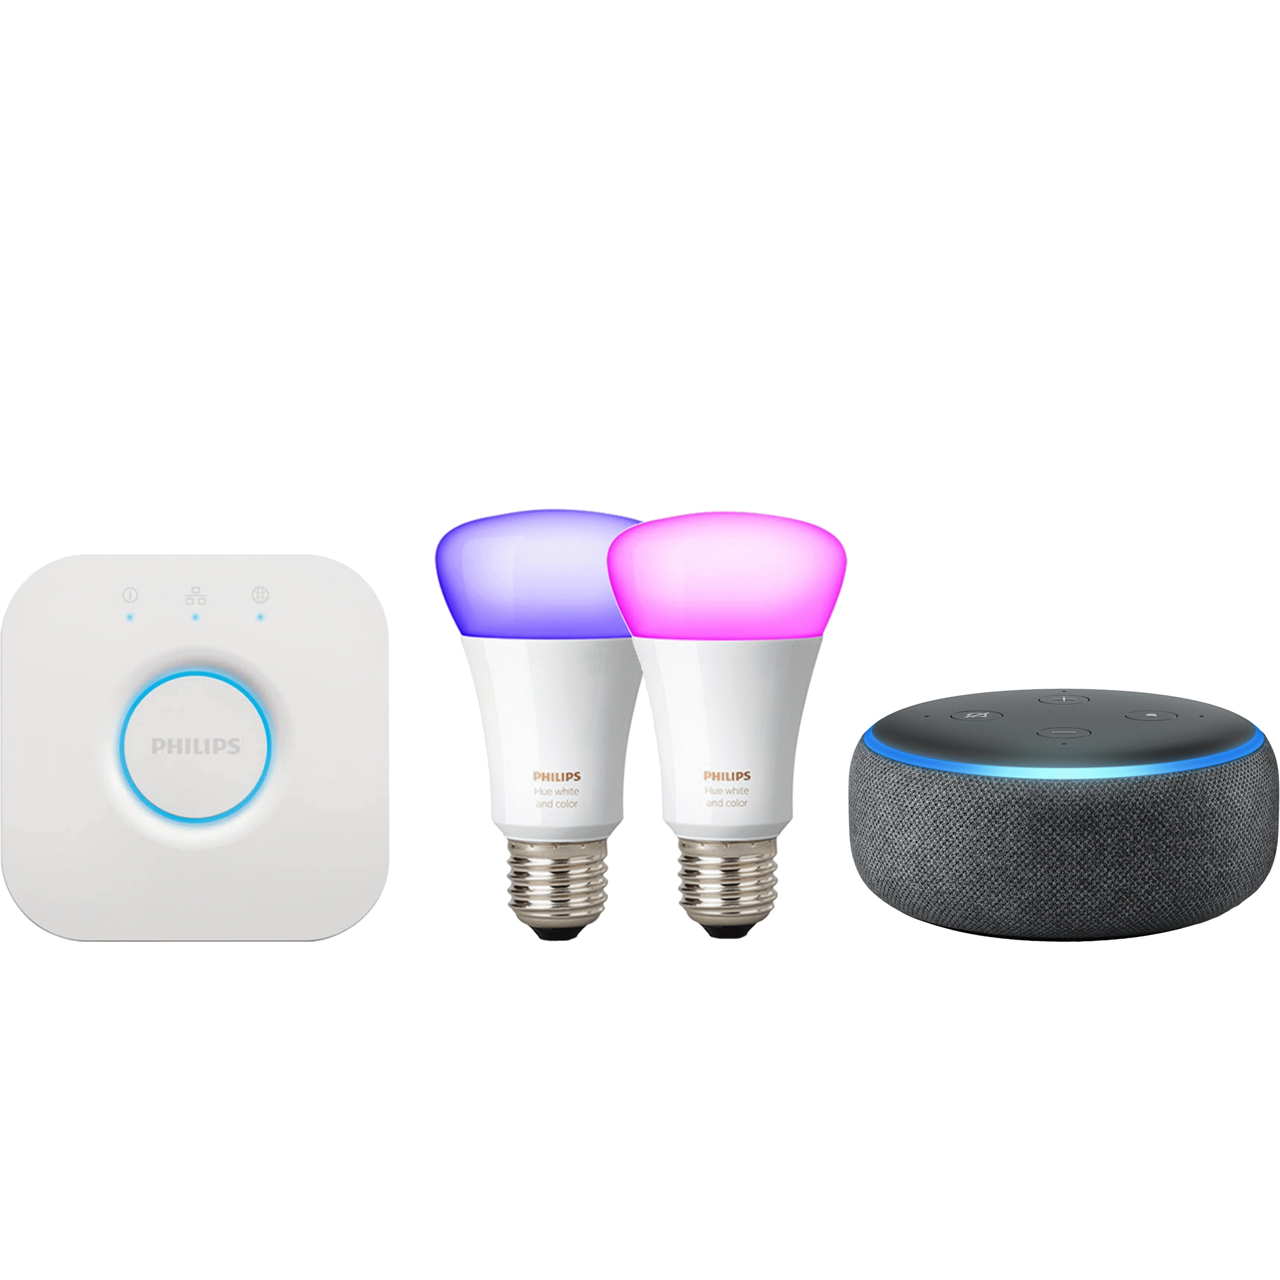 Amazon Echo Dot (3rd Gen) Smart Speaker with Alexa Includes Philips Hue E27 Starter Kit Review